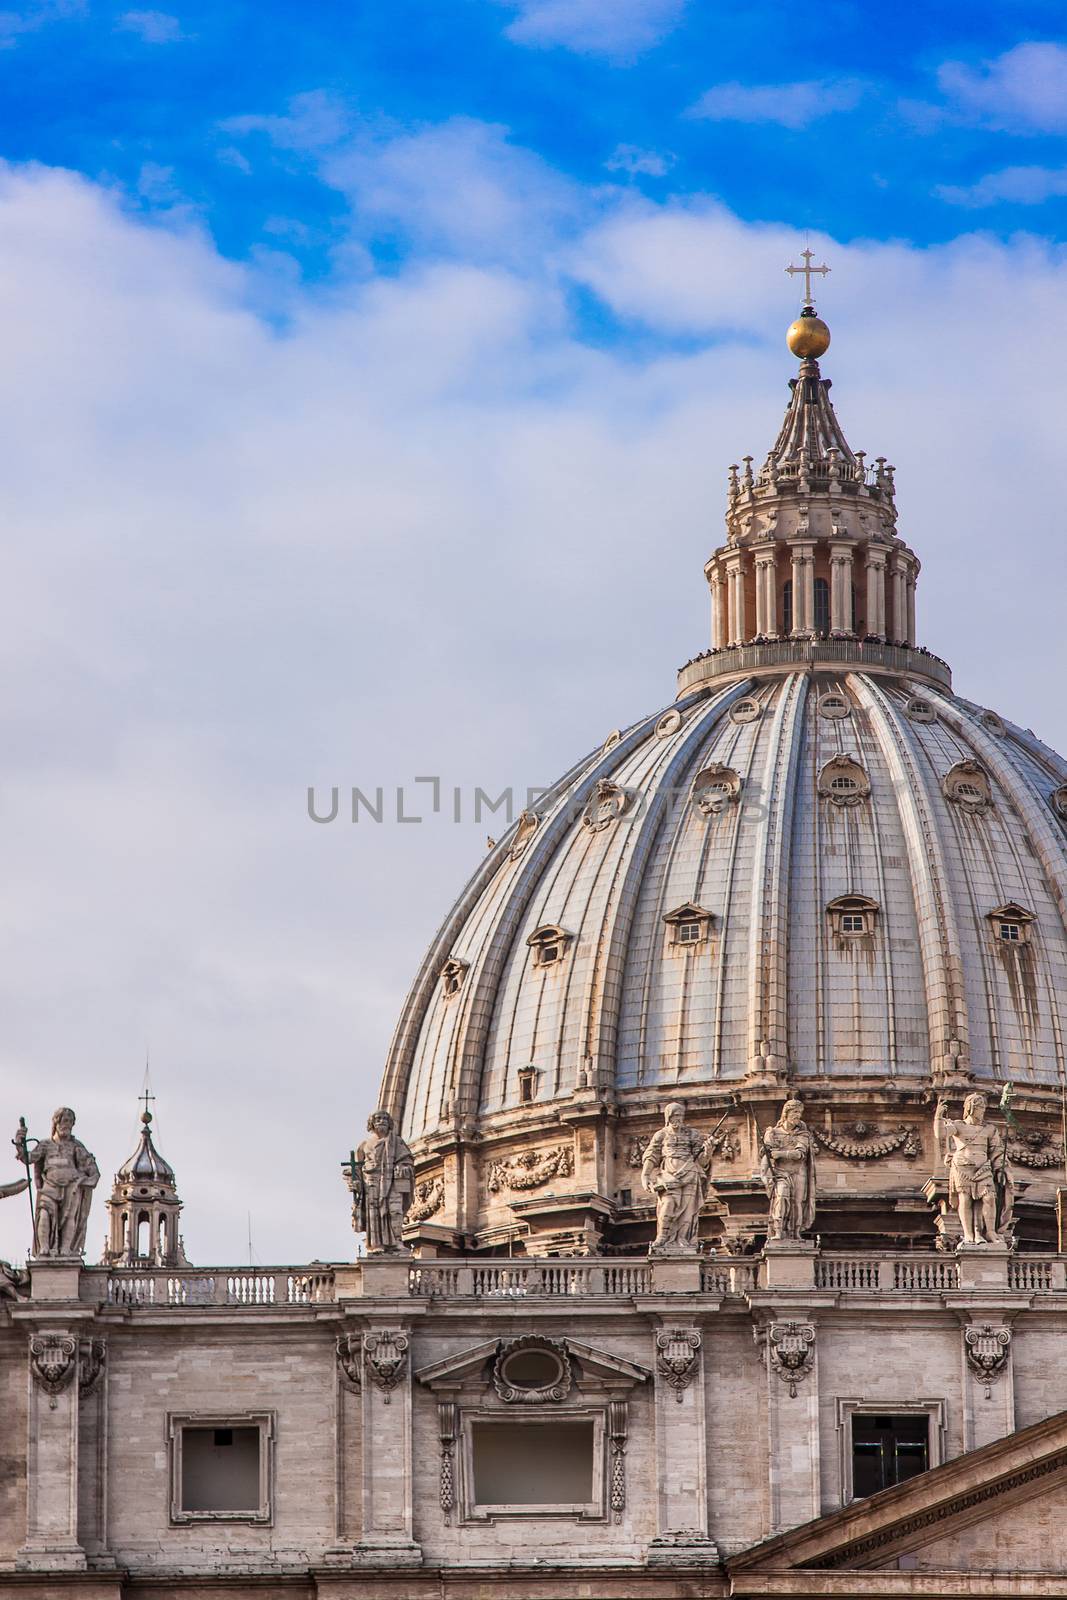 St. Peter's Basilica, St. Peter's Square, Vatican City.